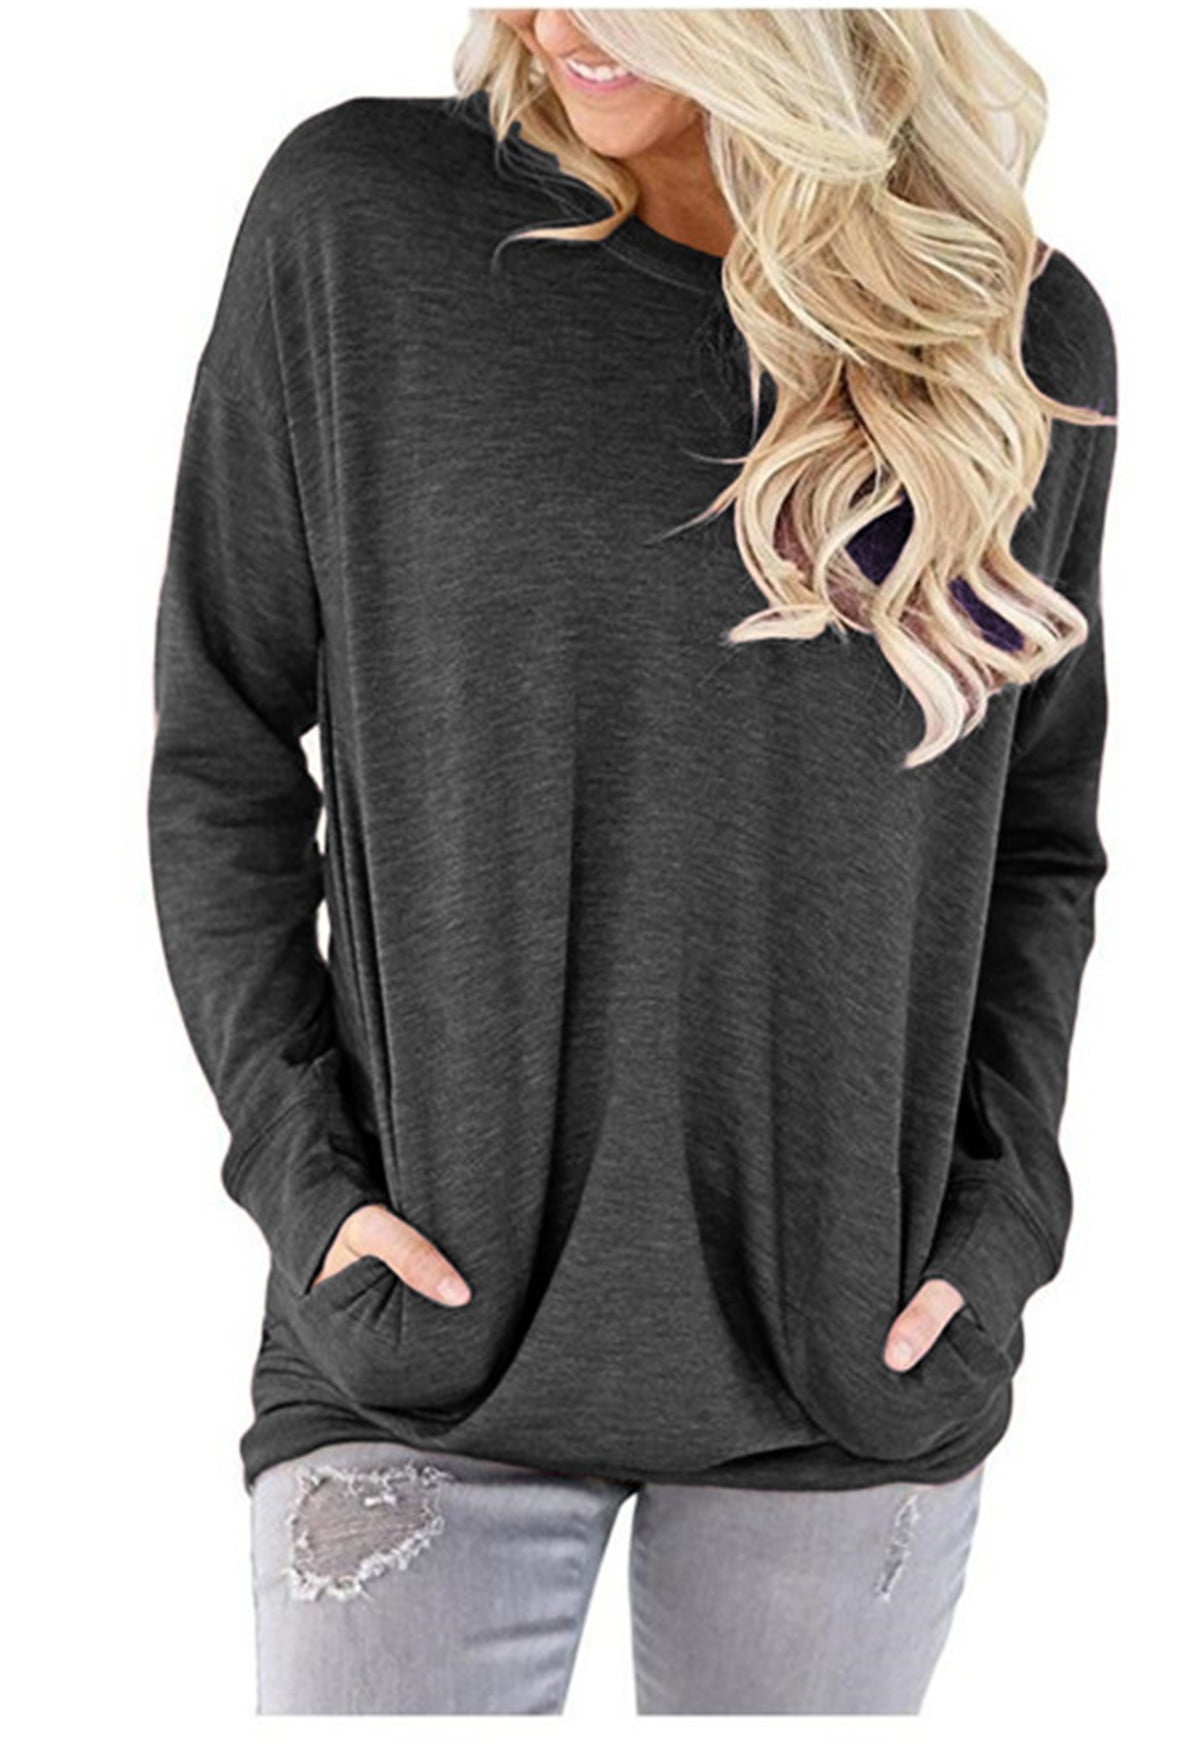 KISSMODA Sweatshirts for Women Crewneck Casual Long Sleeve Shirts Tunic ...